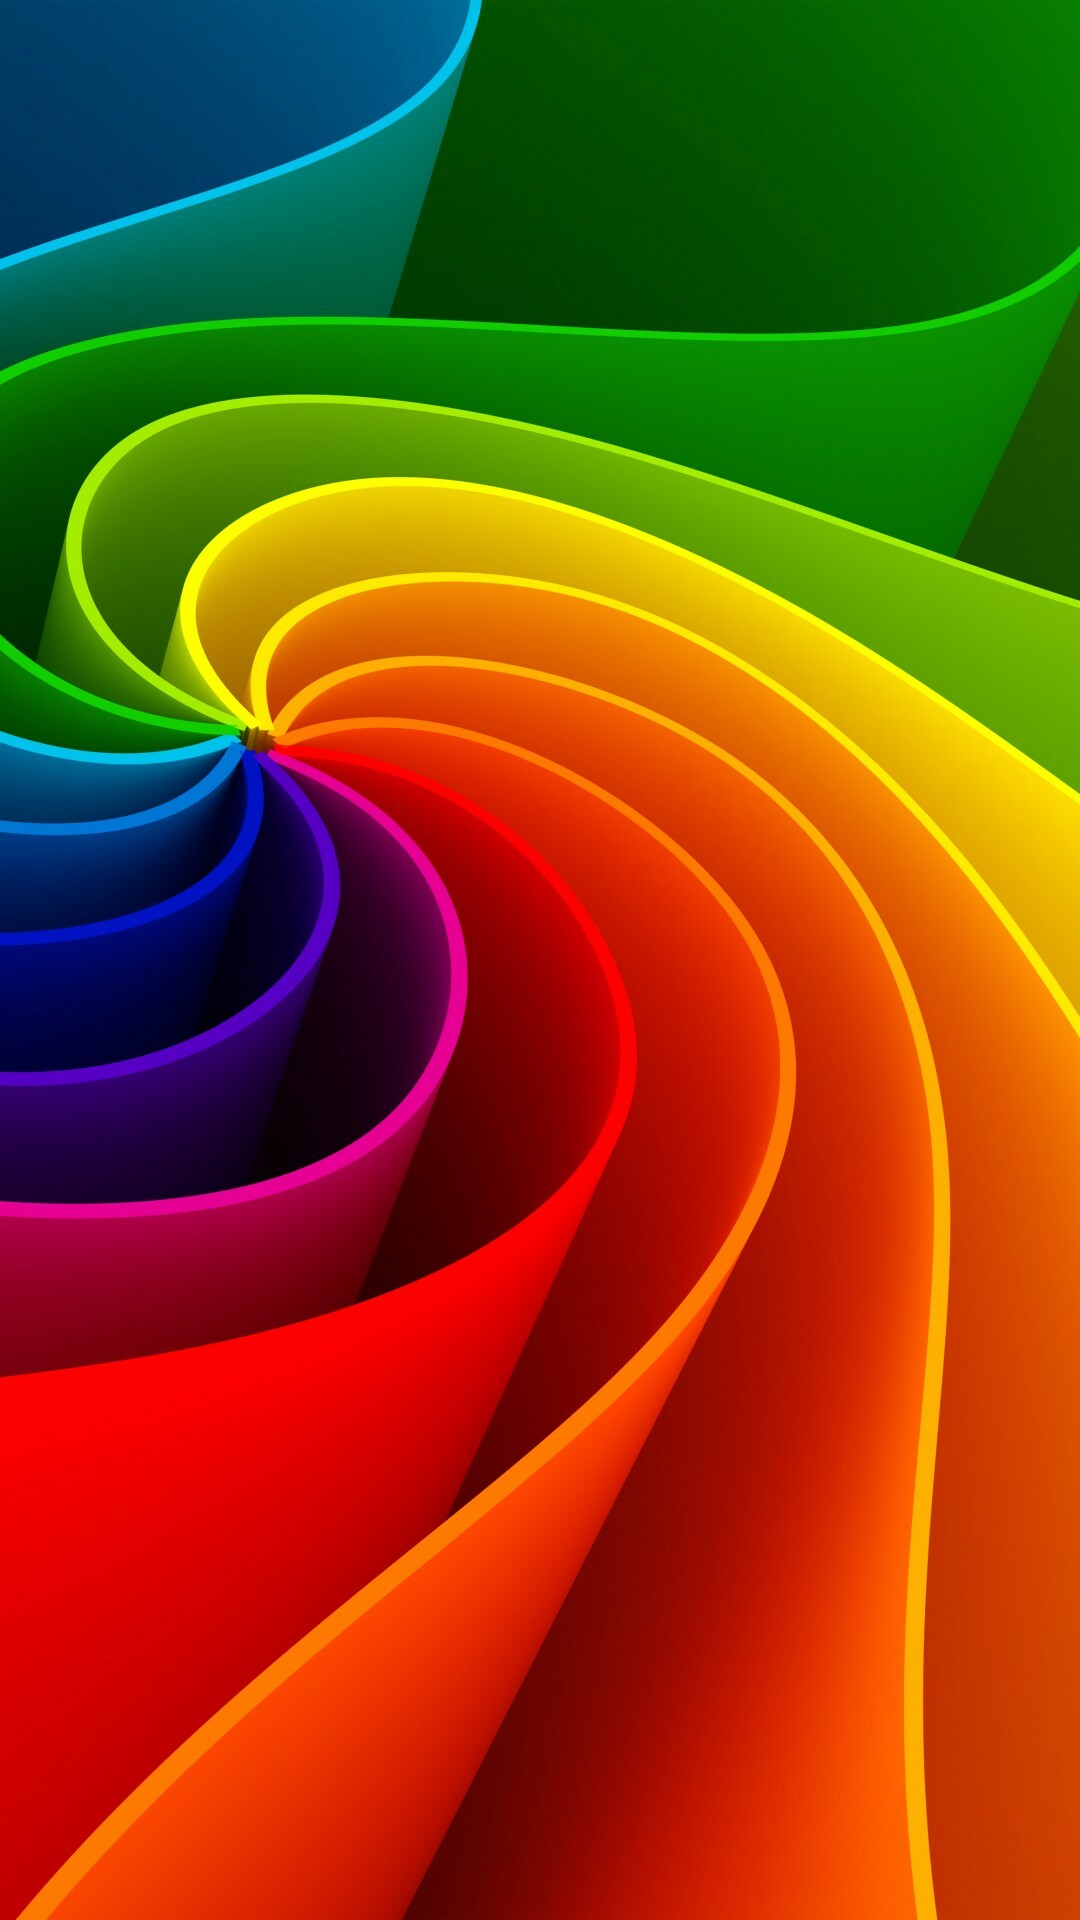 Rainbow Colors: Swirl, Digital art, Symmetry section, Multitone. 1080x1920 Full HD Wallpaper.